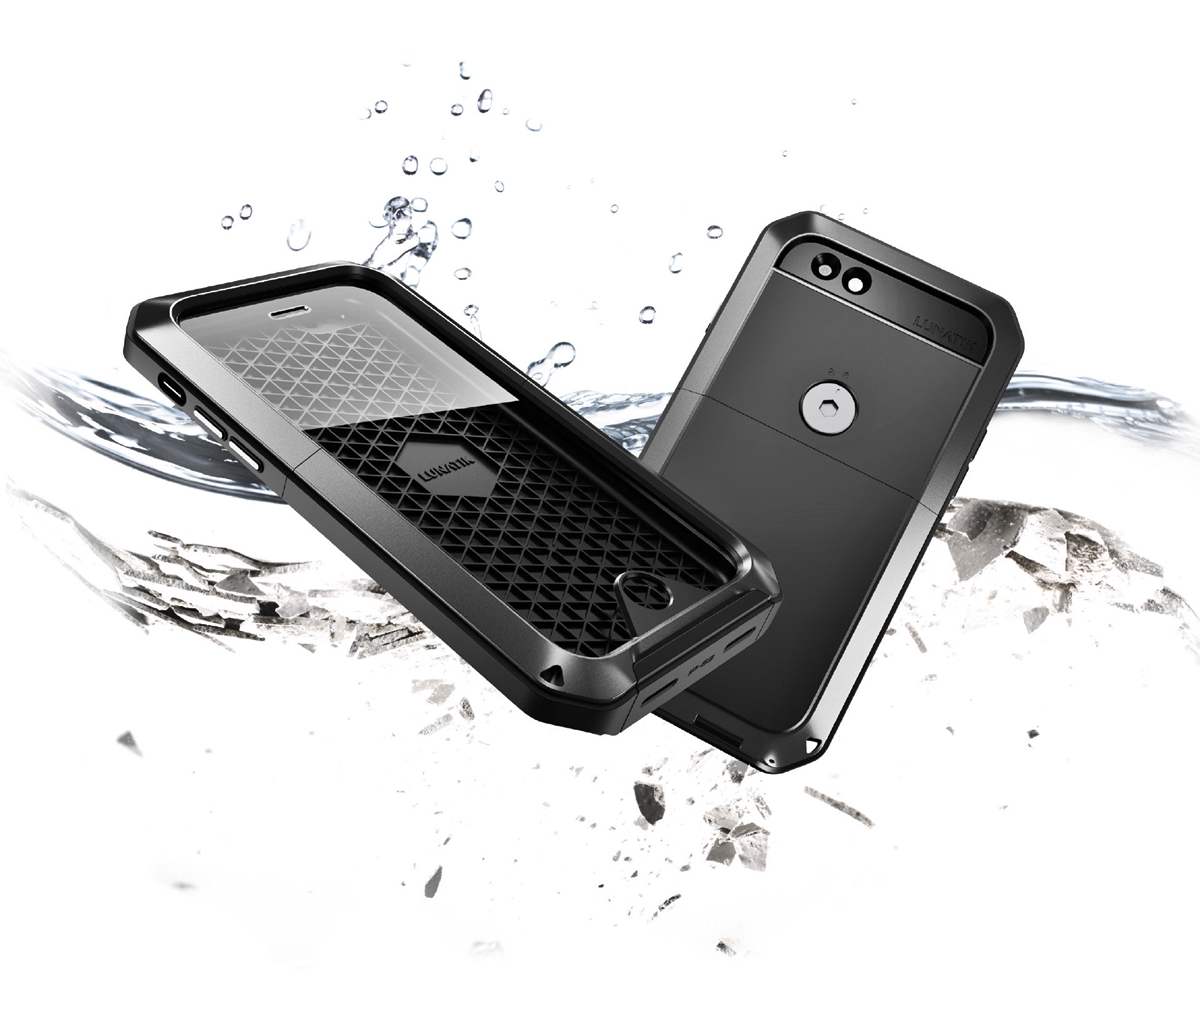 iphone-6-6-plus-case-of-the-week-the-aquatik-and-taktik-360-waterproof-cases